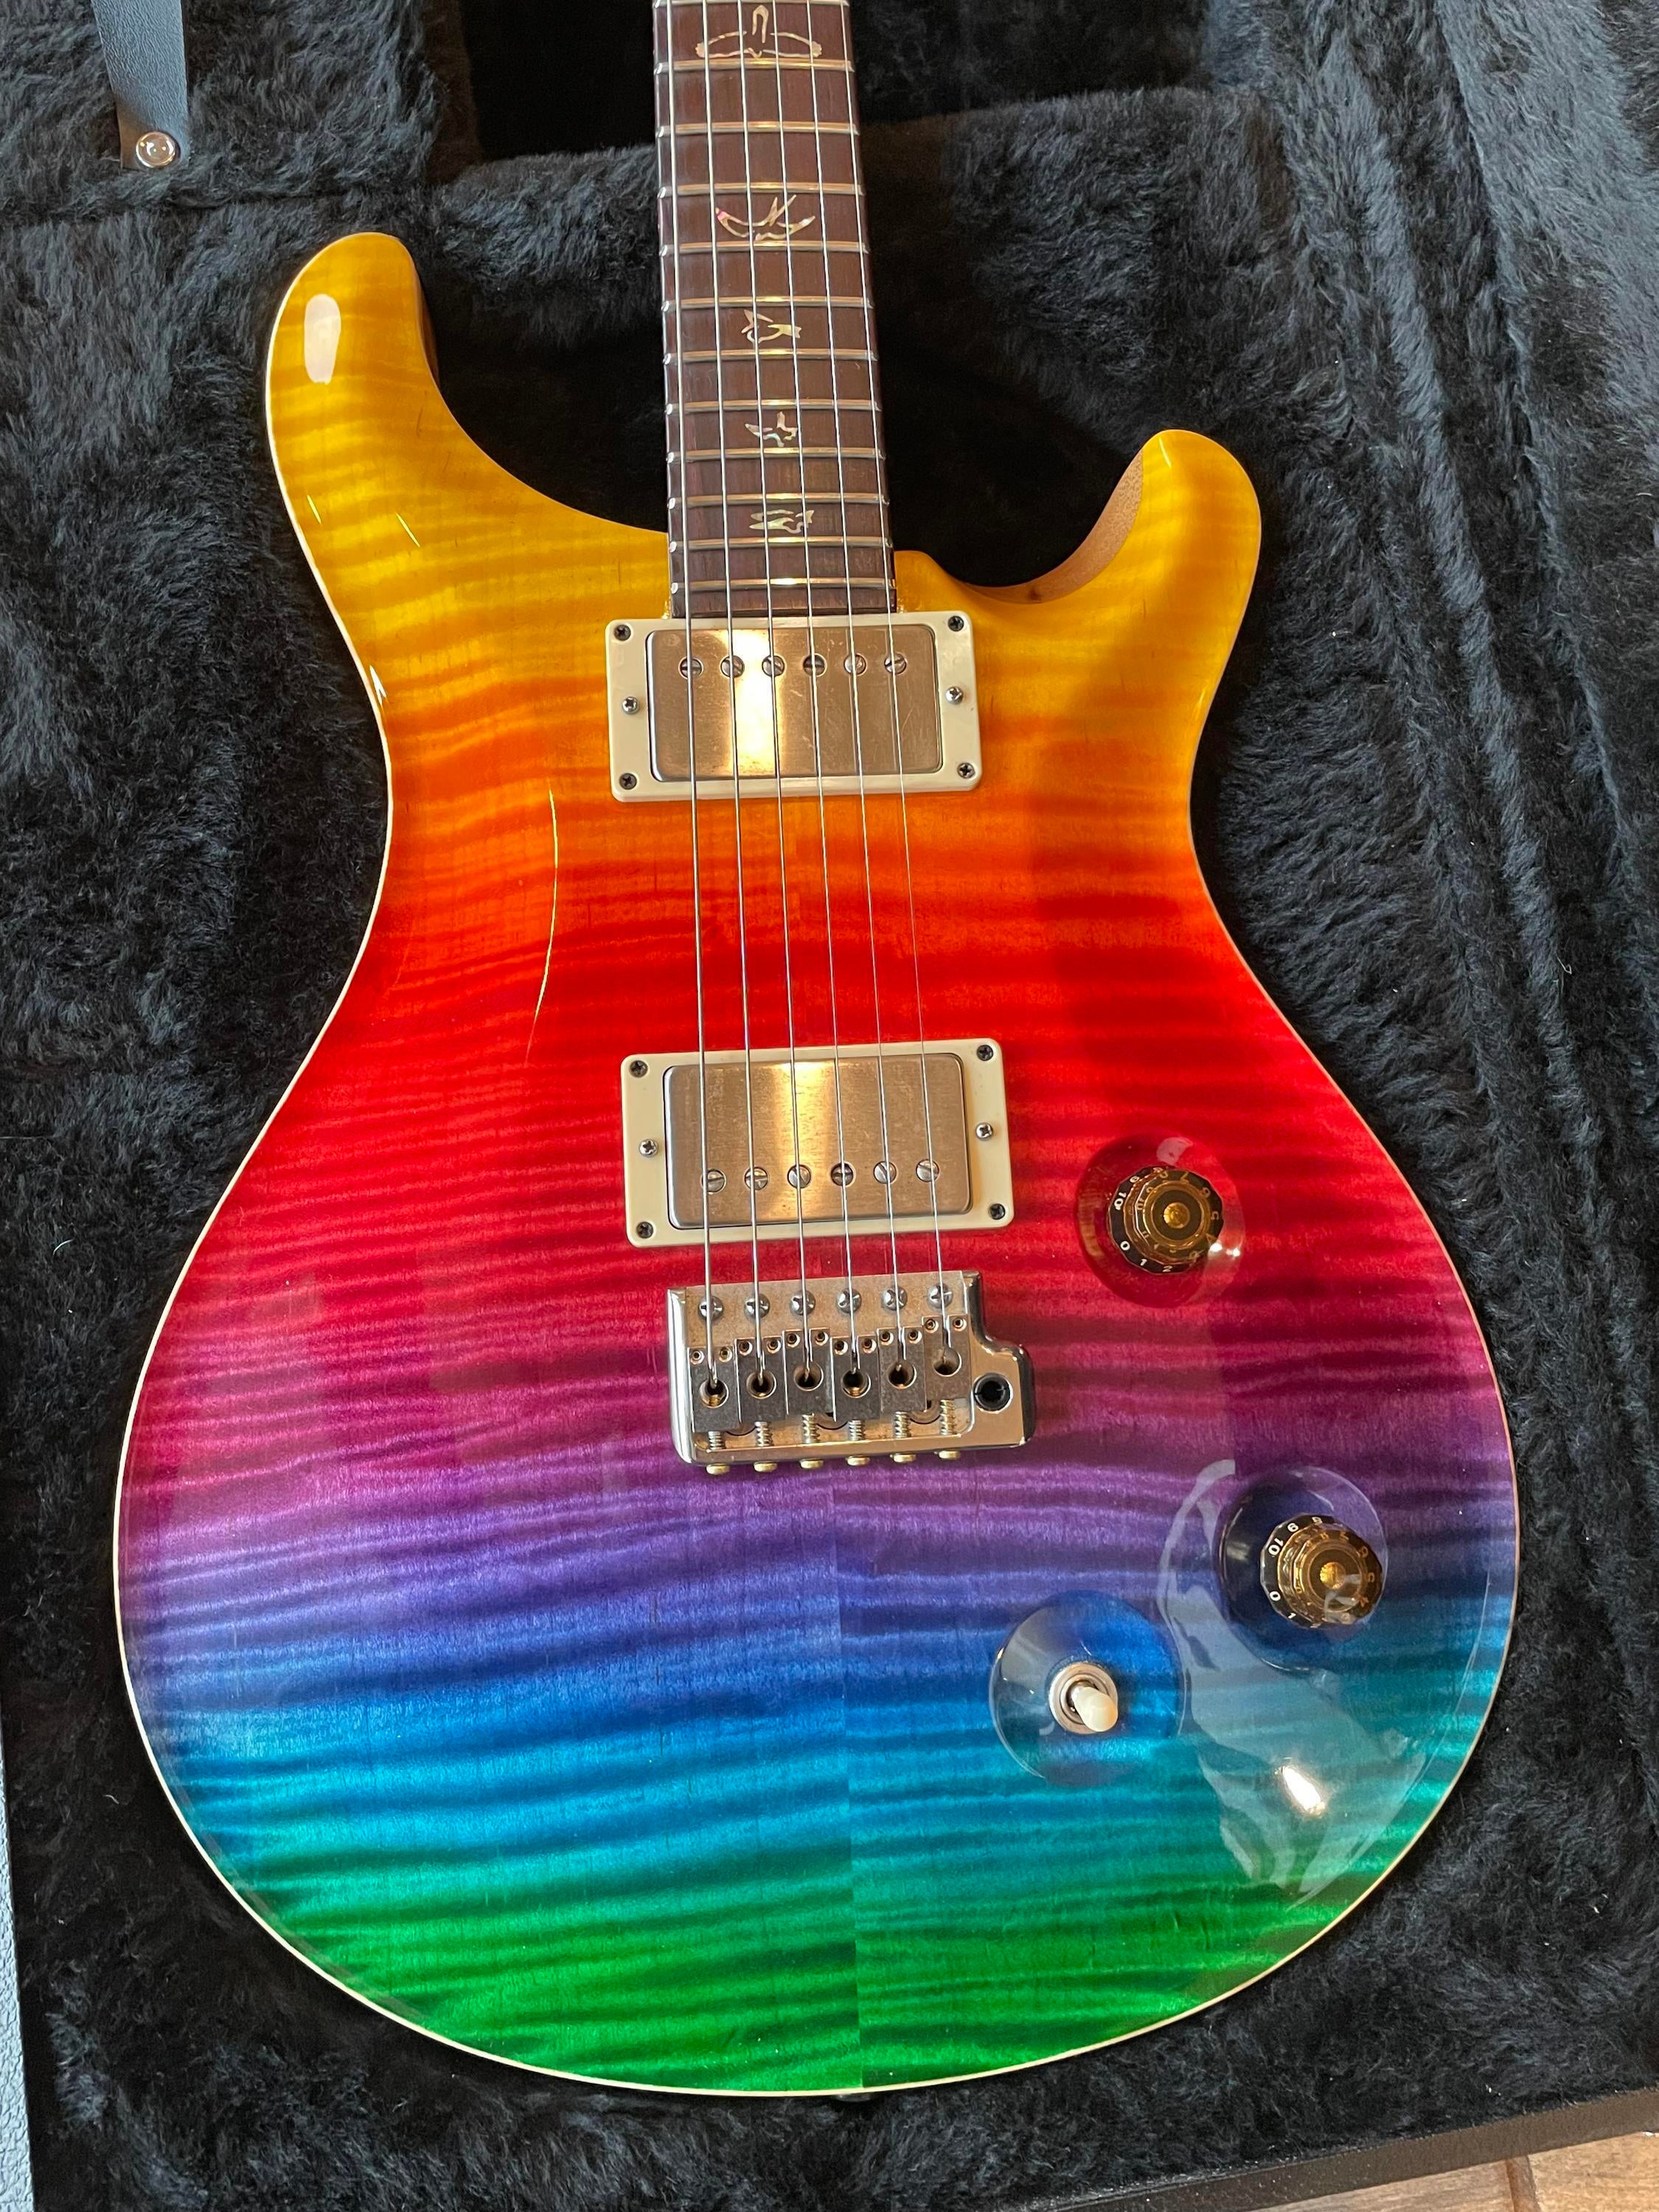 Used PRS Prism Al Di Meola Signature Guitar! - Sweetwater's Gear Exchange